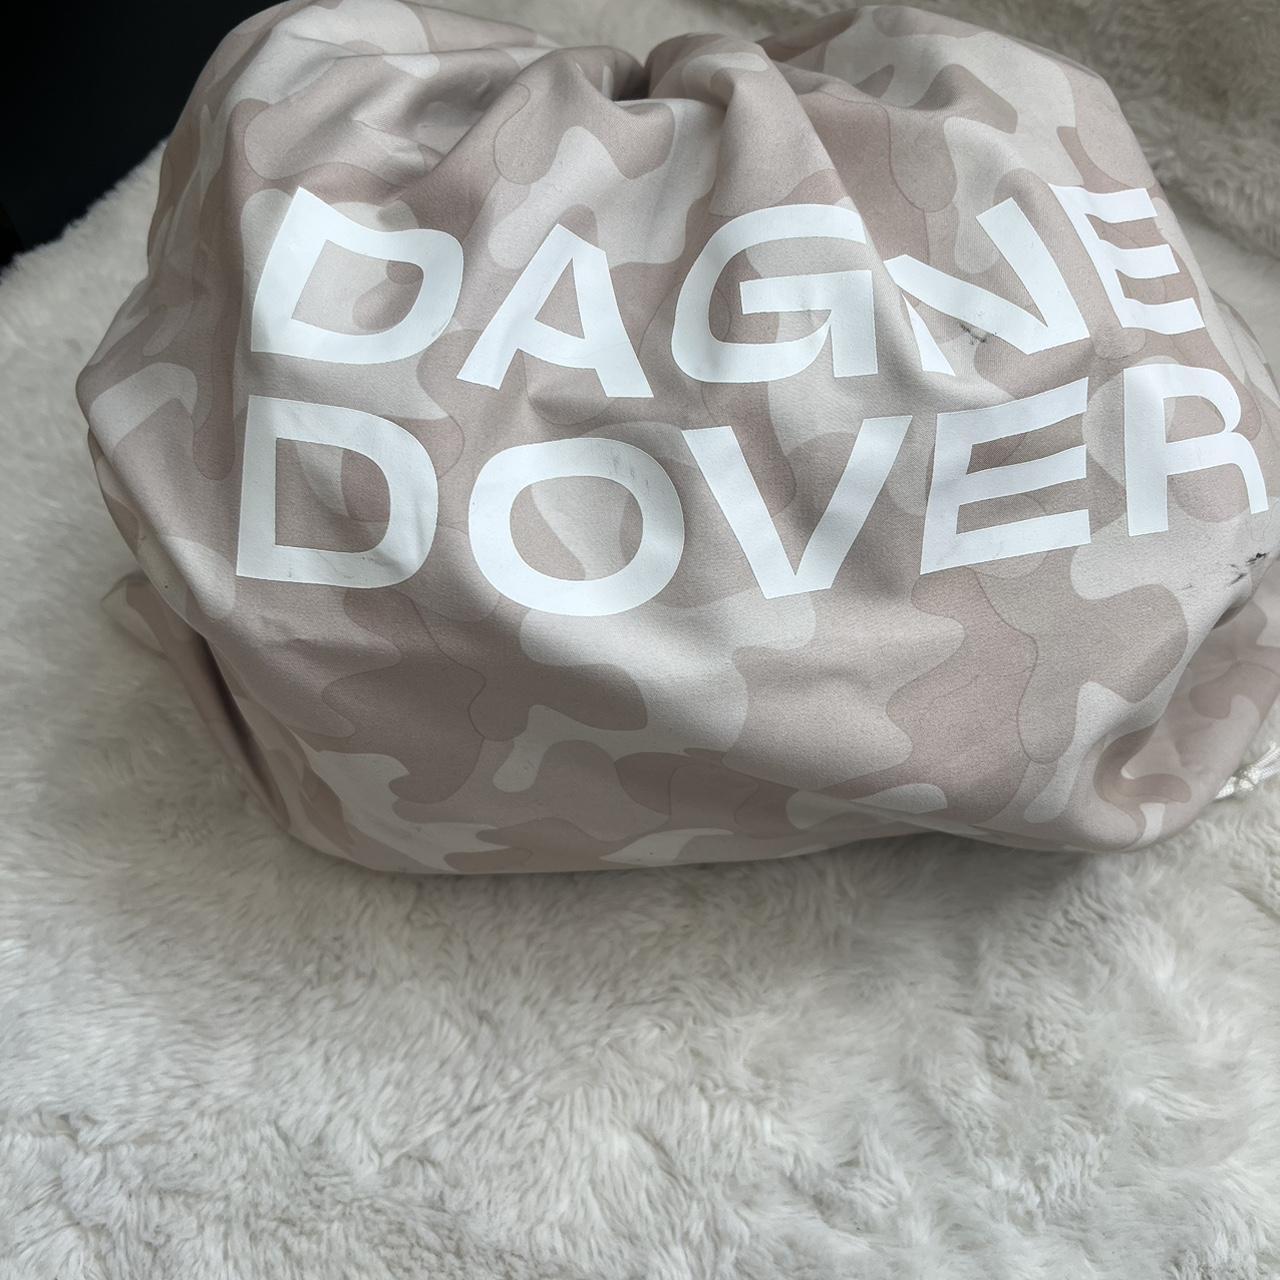 WHAT'S IN MY BAG  DAGNE DOVER LANDON CARRYALL💕 